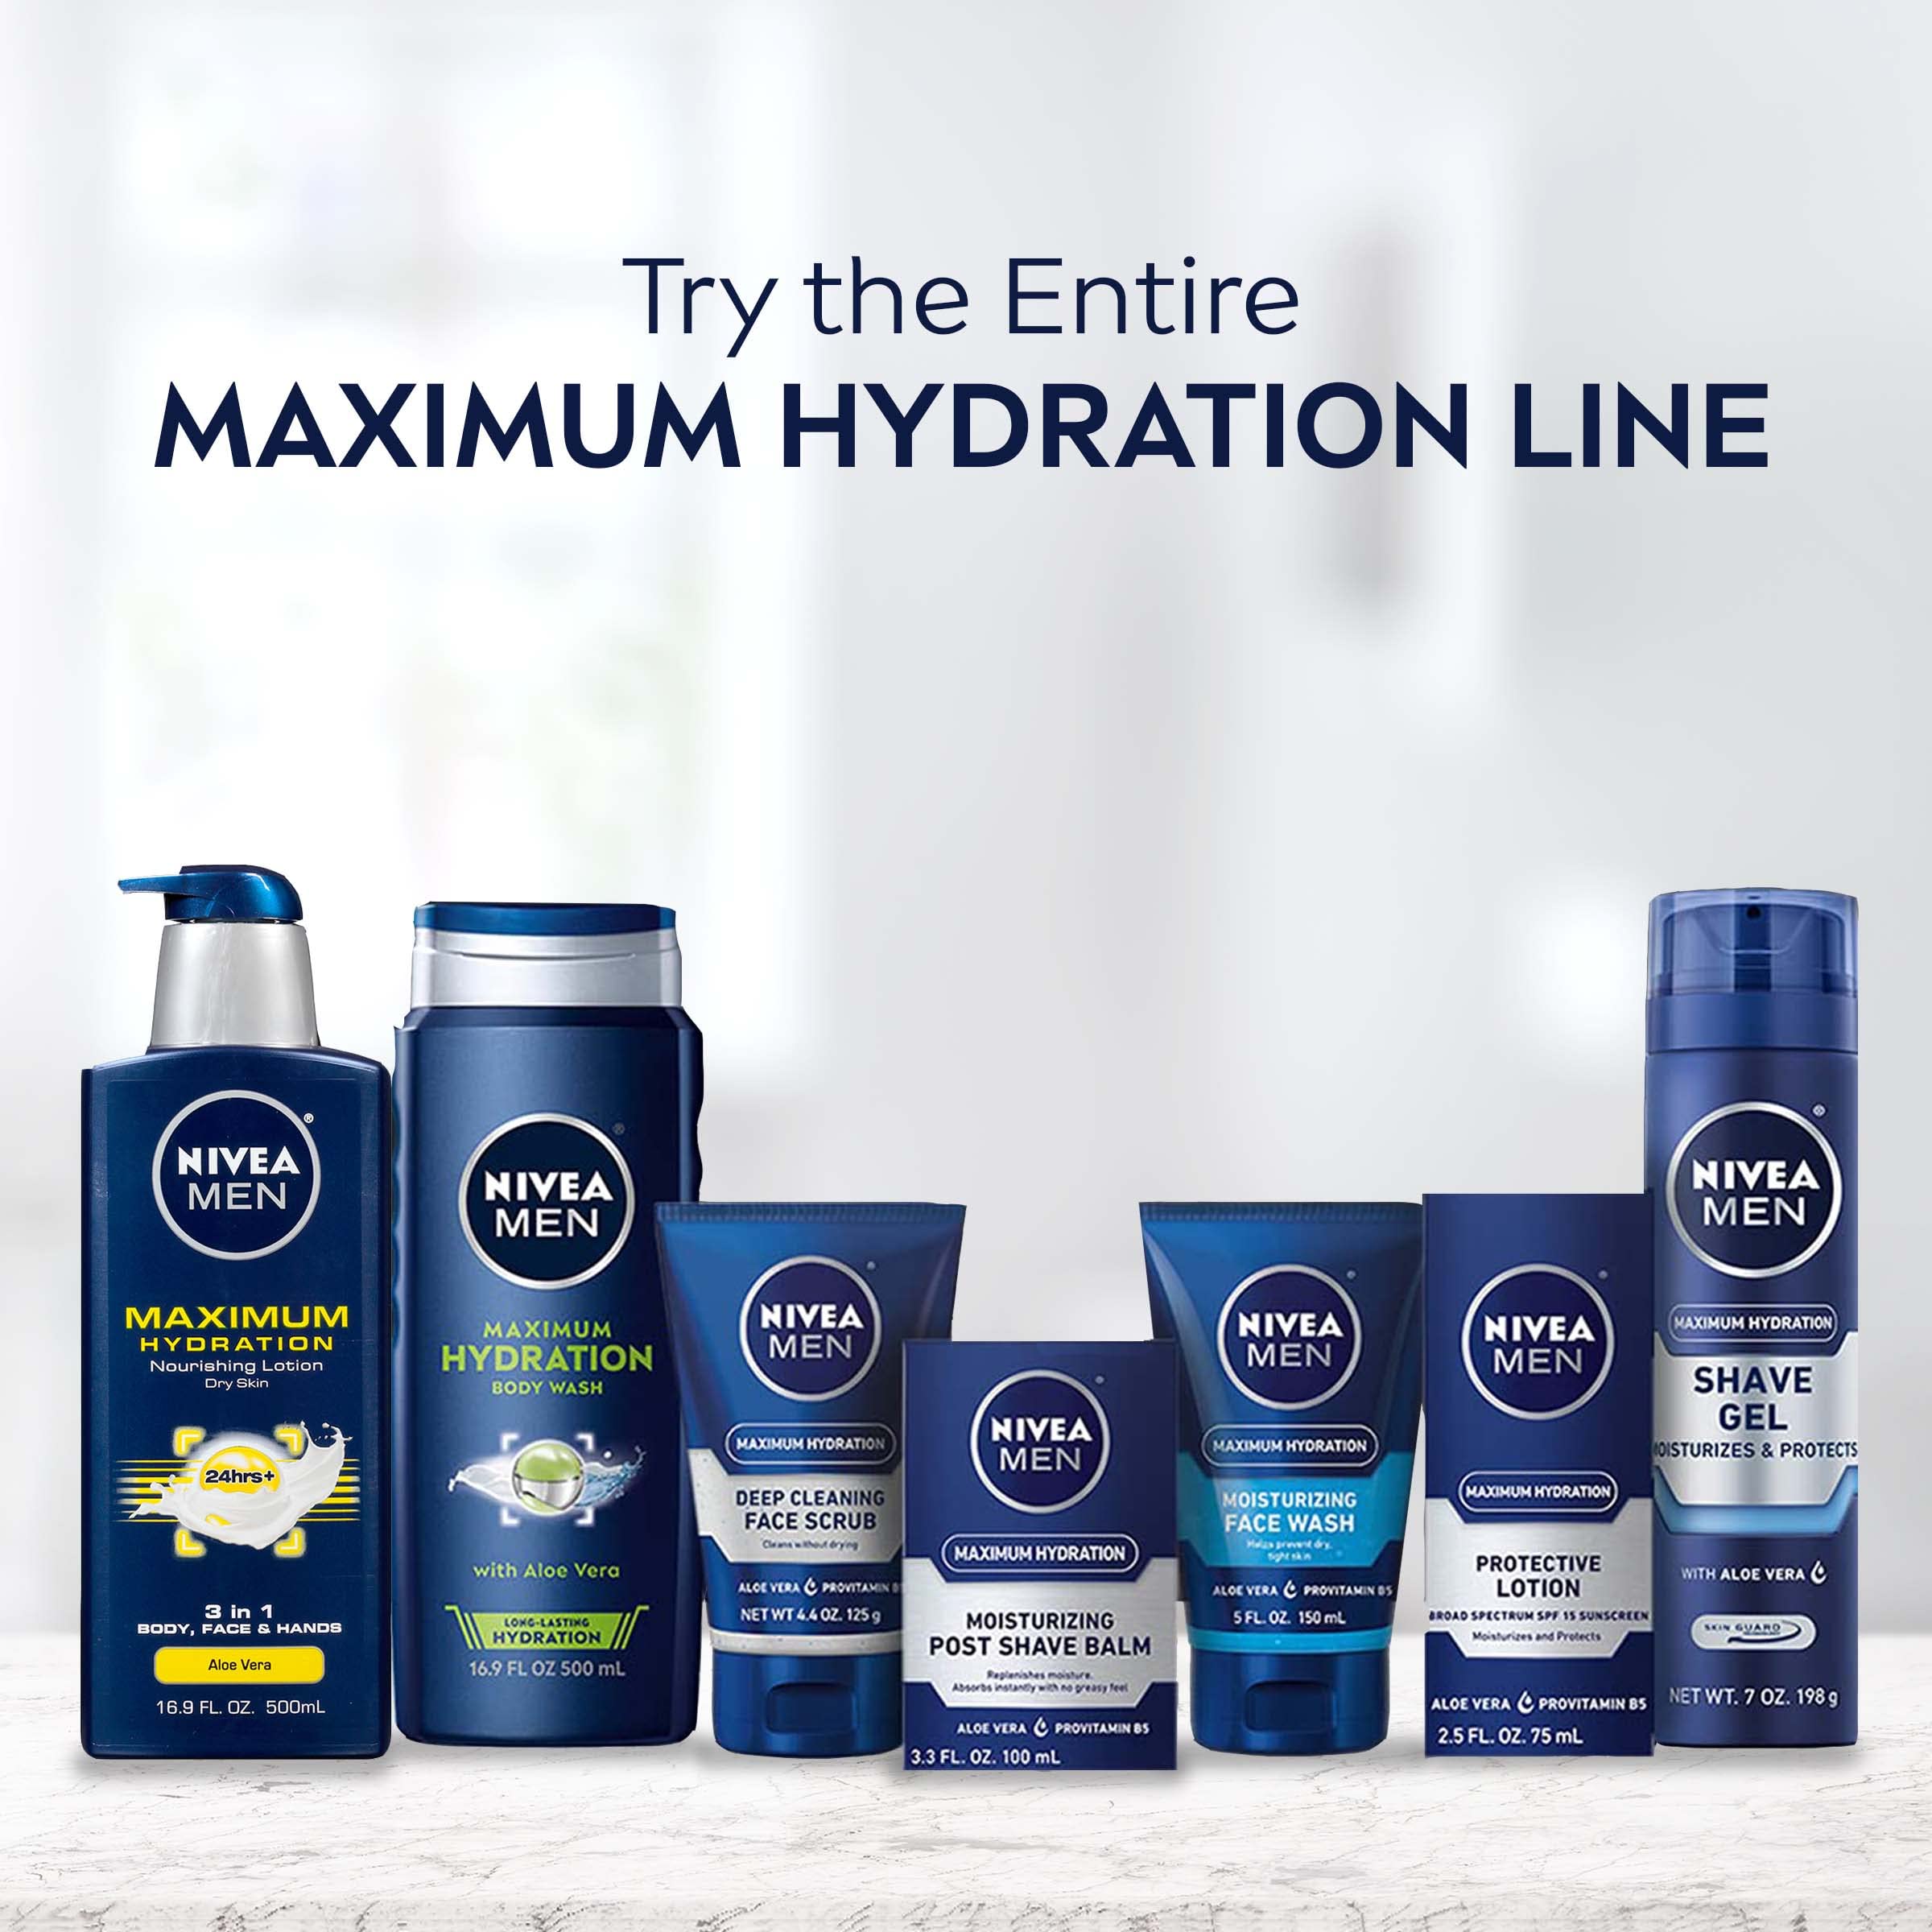 NIVEA Men Maximum Hydration 3-in-1 Body Wash - Clean, Hydrate and Refresh with Aloe Vera - 16.9 fl. oz. Bottle